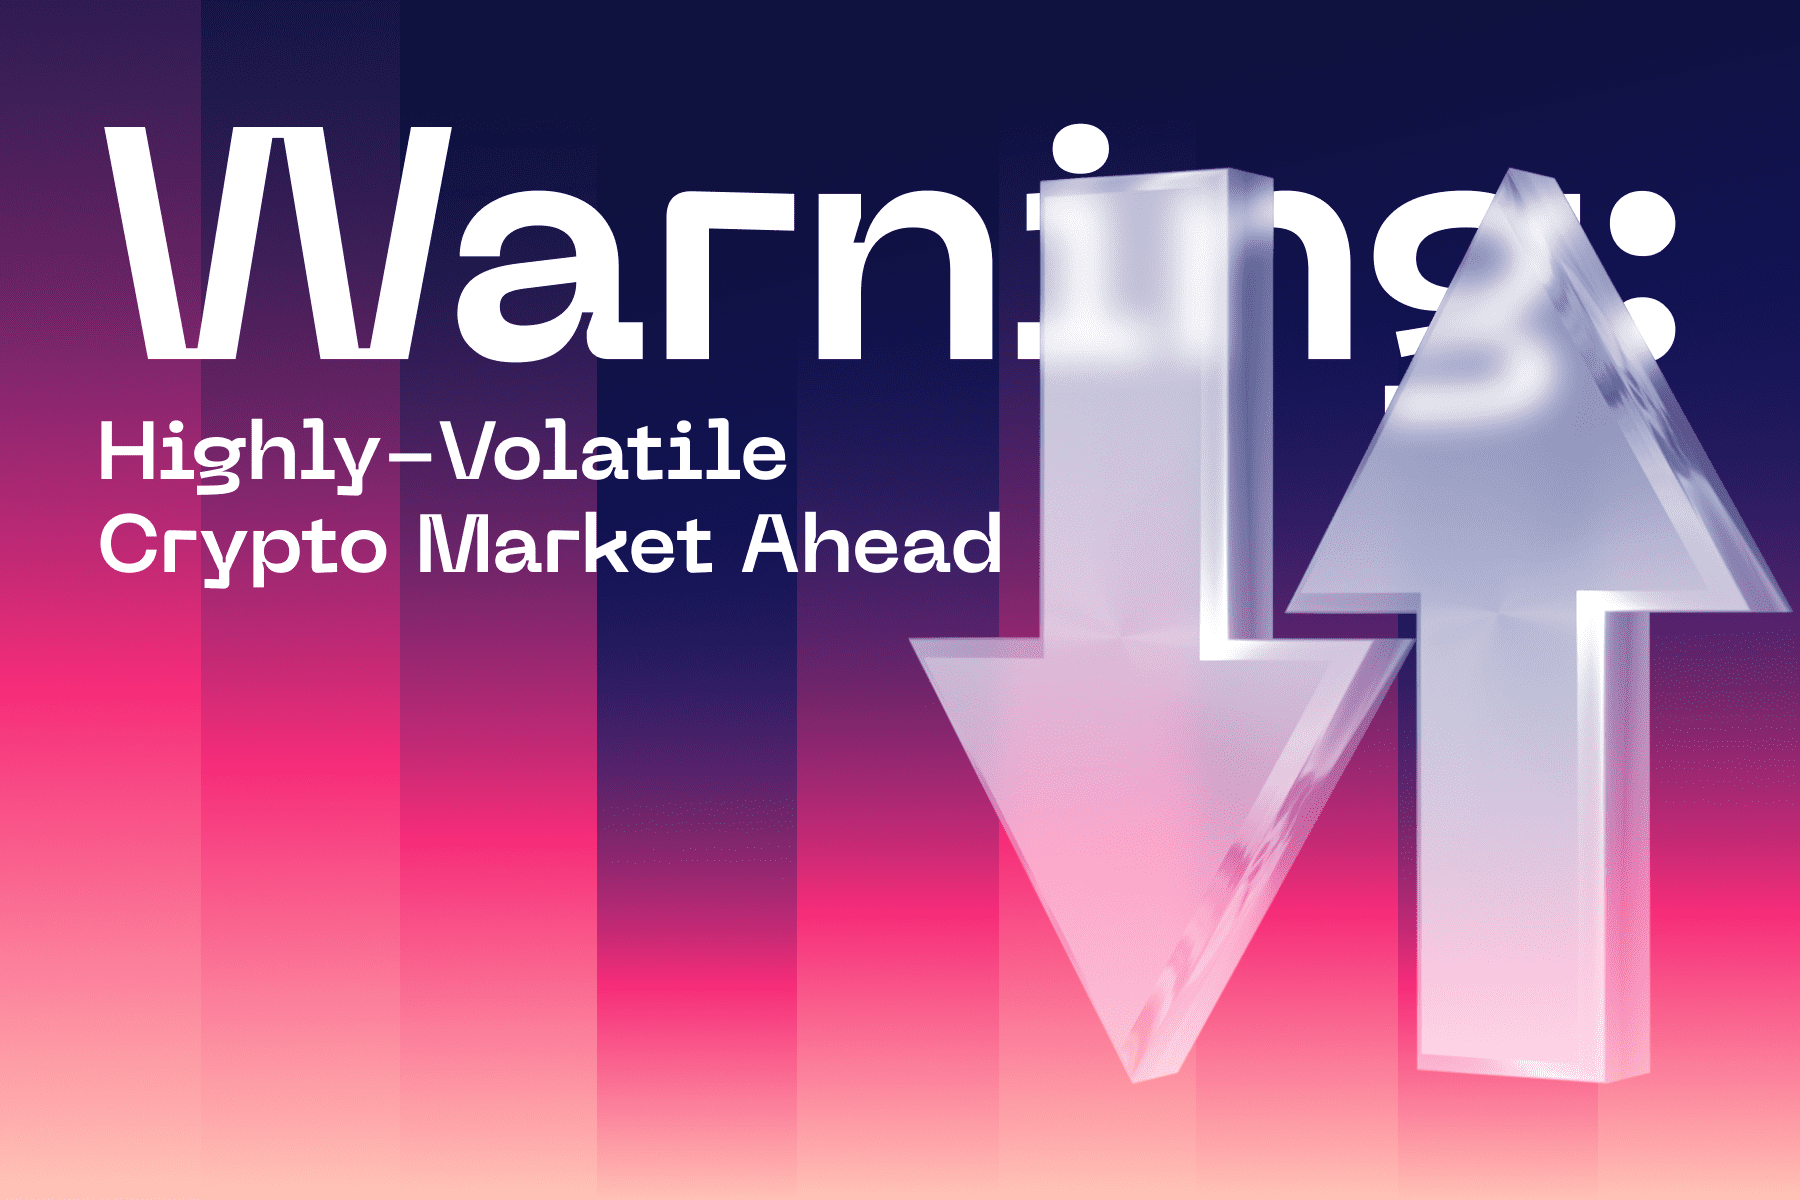 Warning: Highly-Volatile Crypto Market Ahead